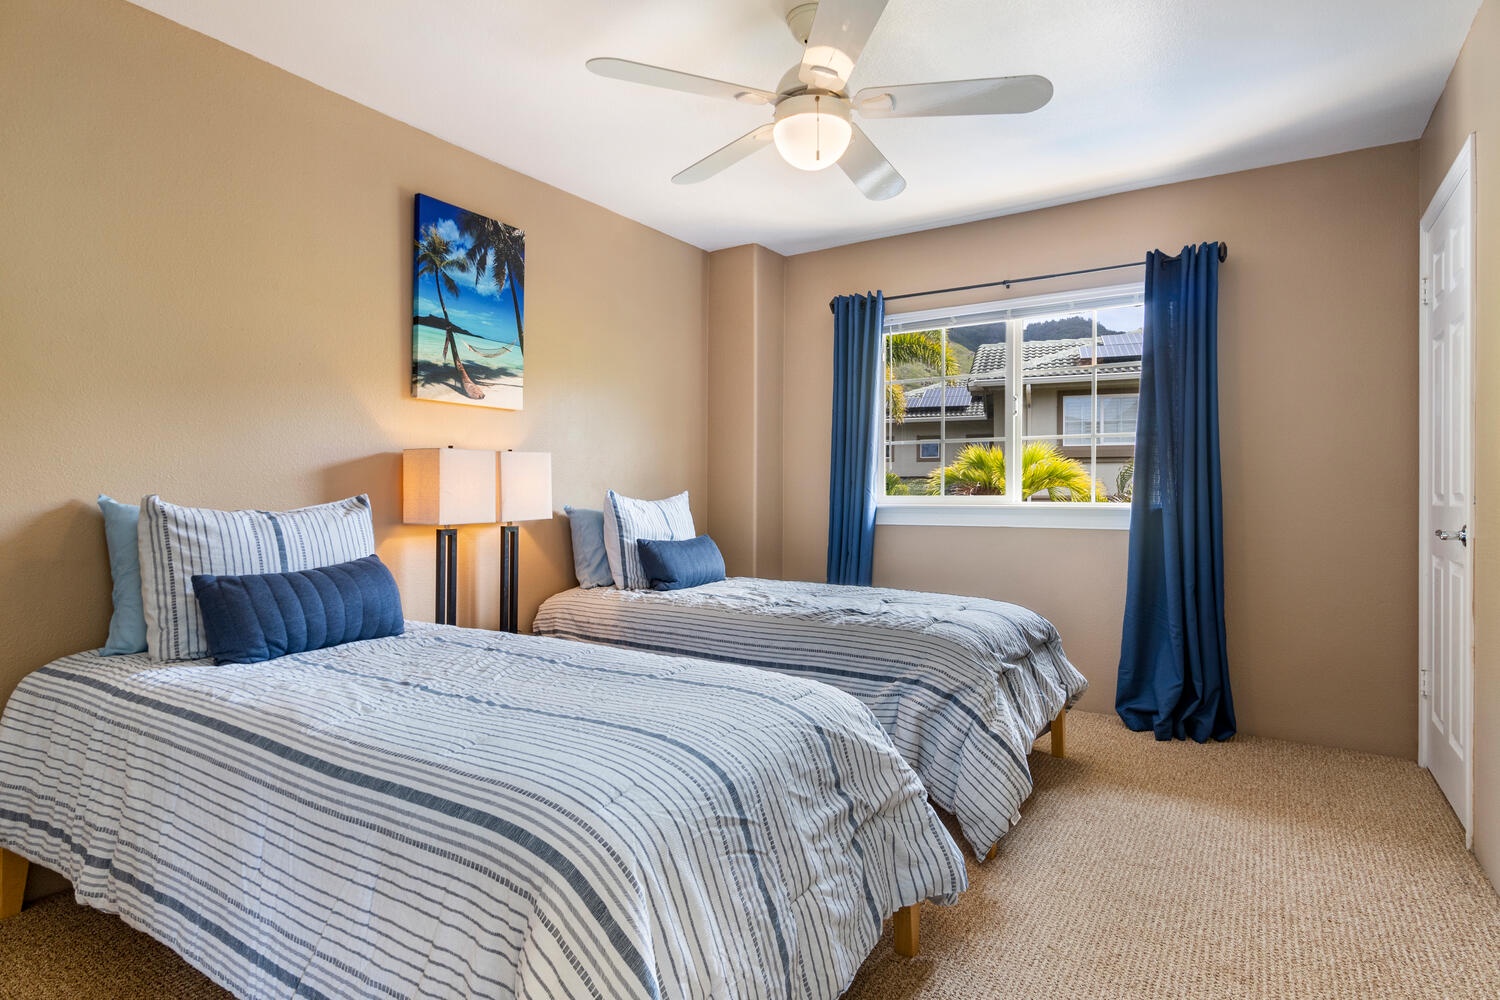 Honolulu Vacation Rentals, Melemele Hale - Bedroom 5, two twin beds